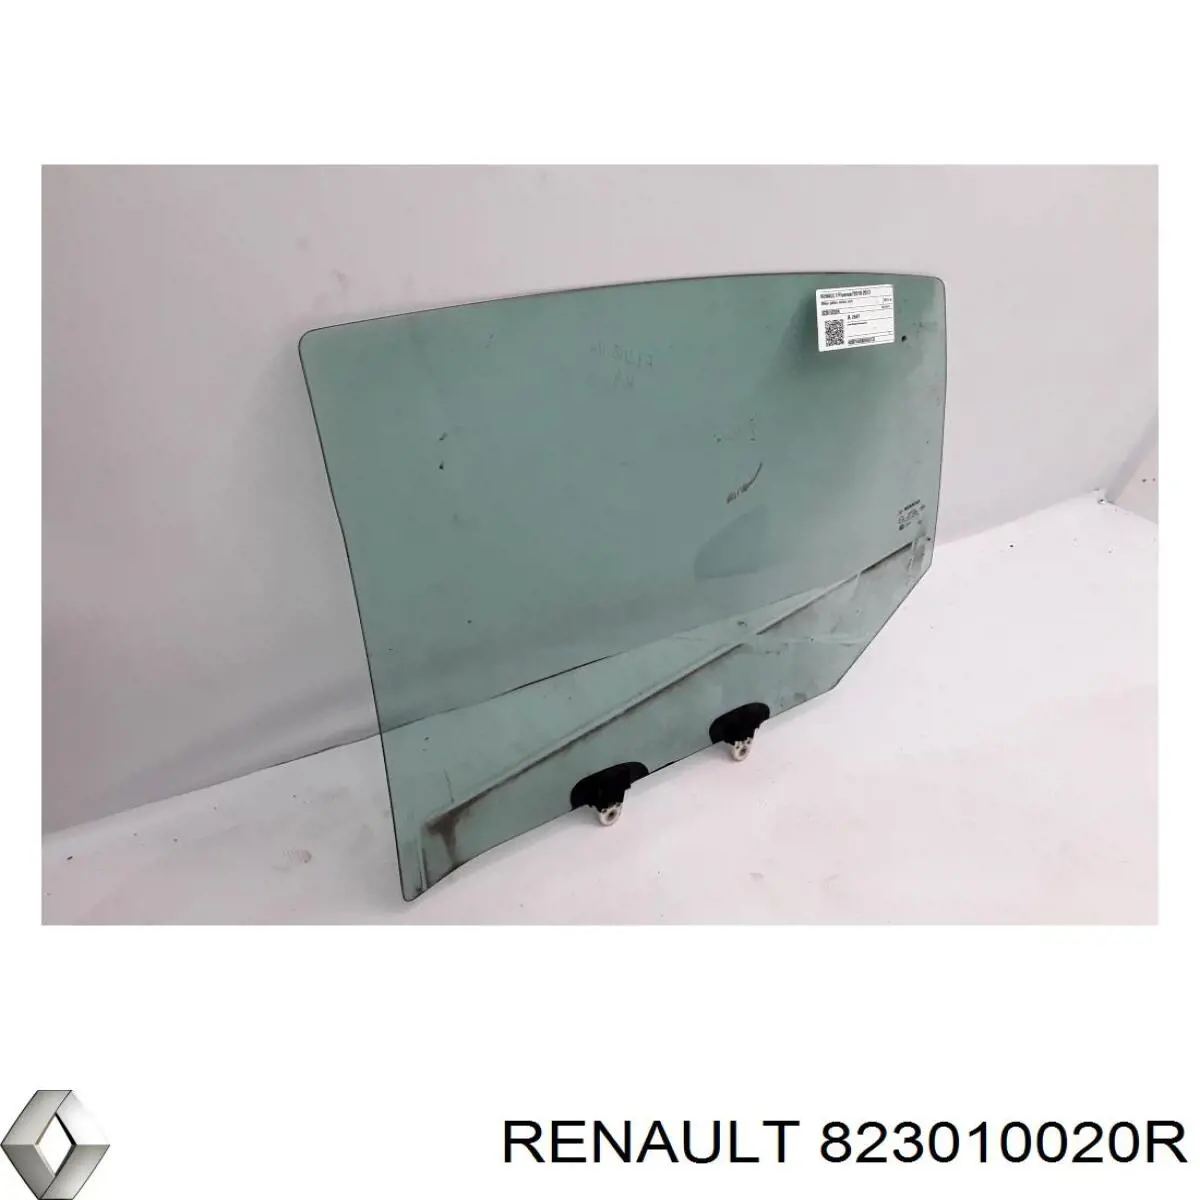 823010020R Renault (RVI) luna de puerta trasera izquierda